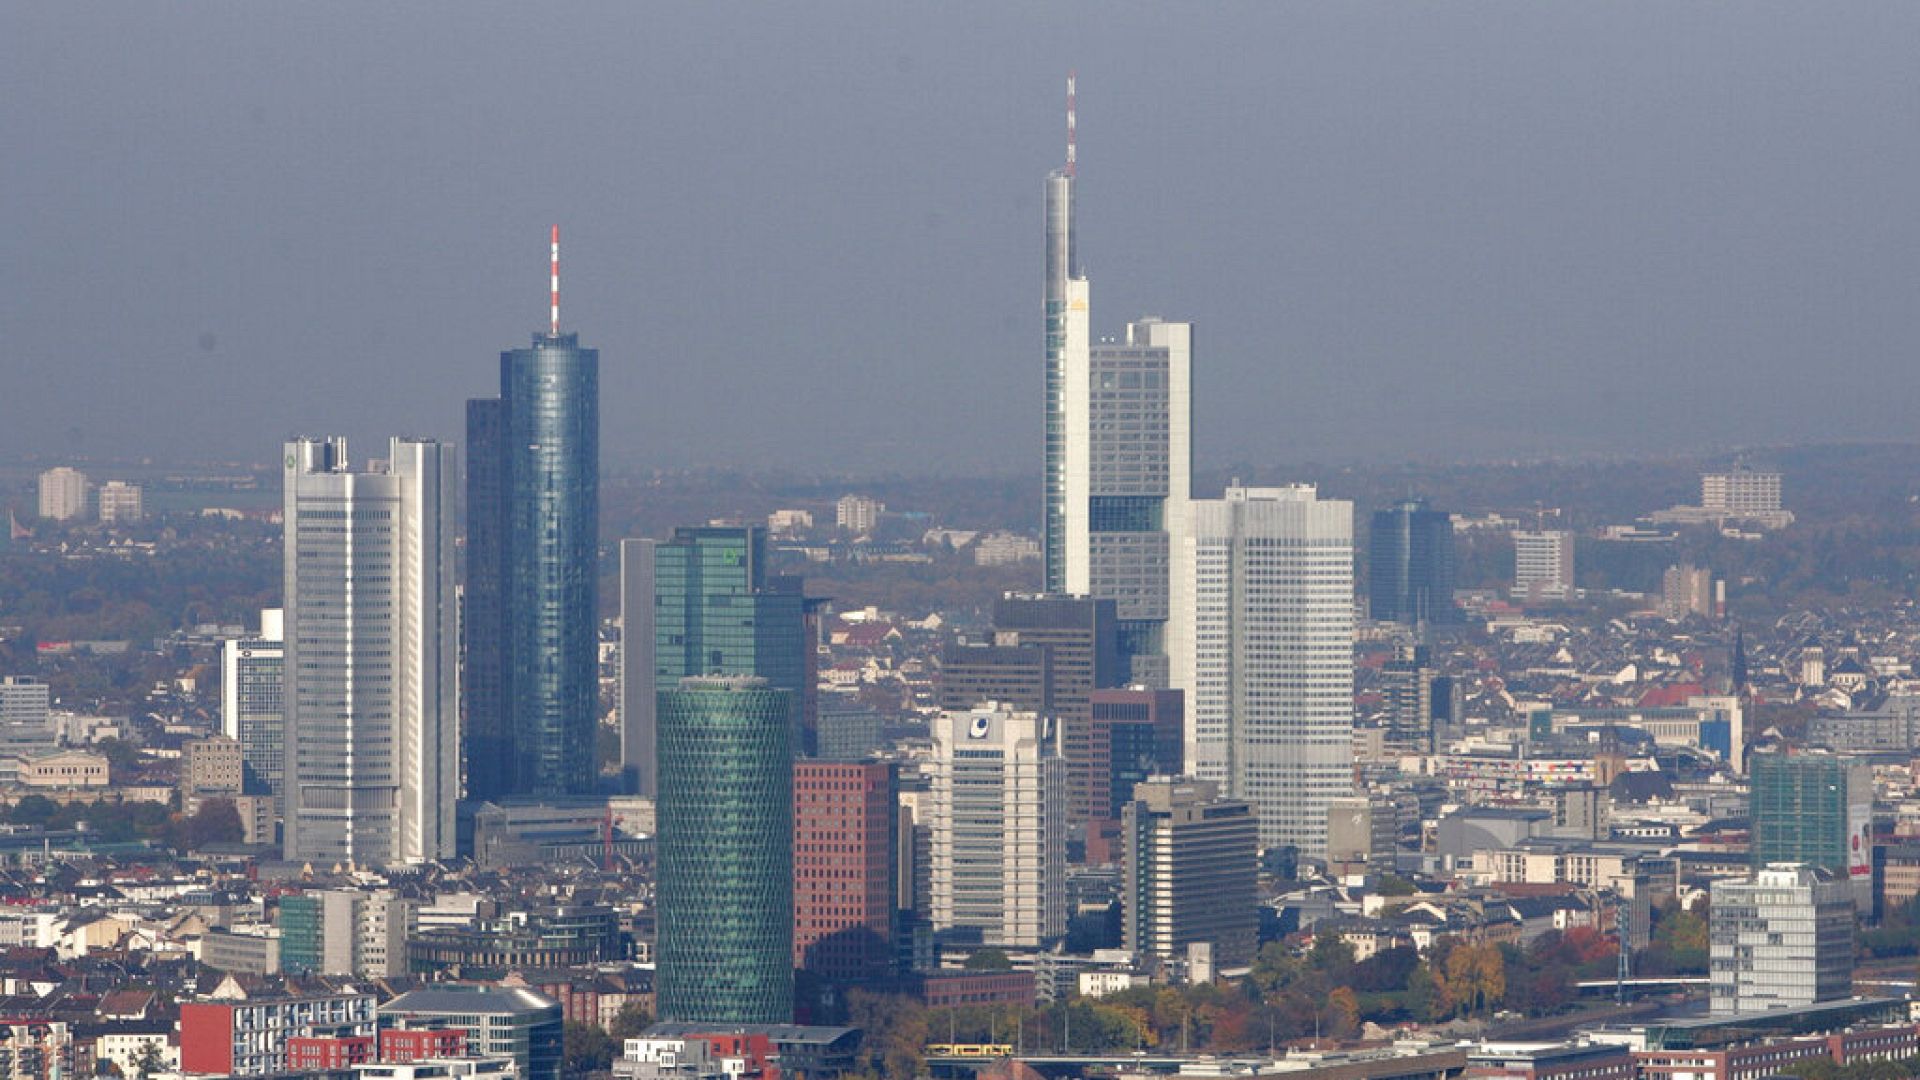 EU Policy: AMLA, the EU's new anti-money laundering agency, will be based in Frankfurt